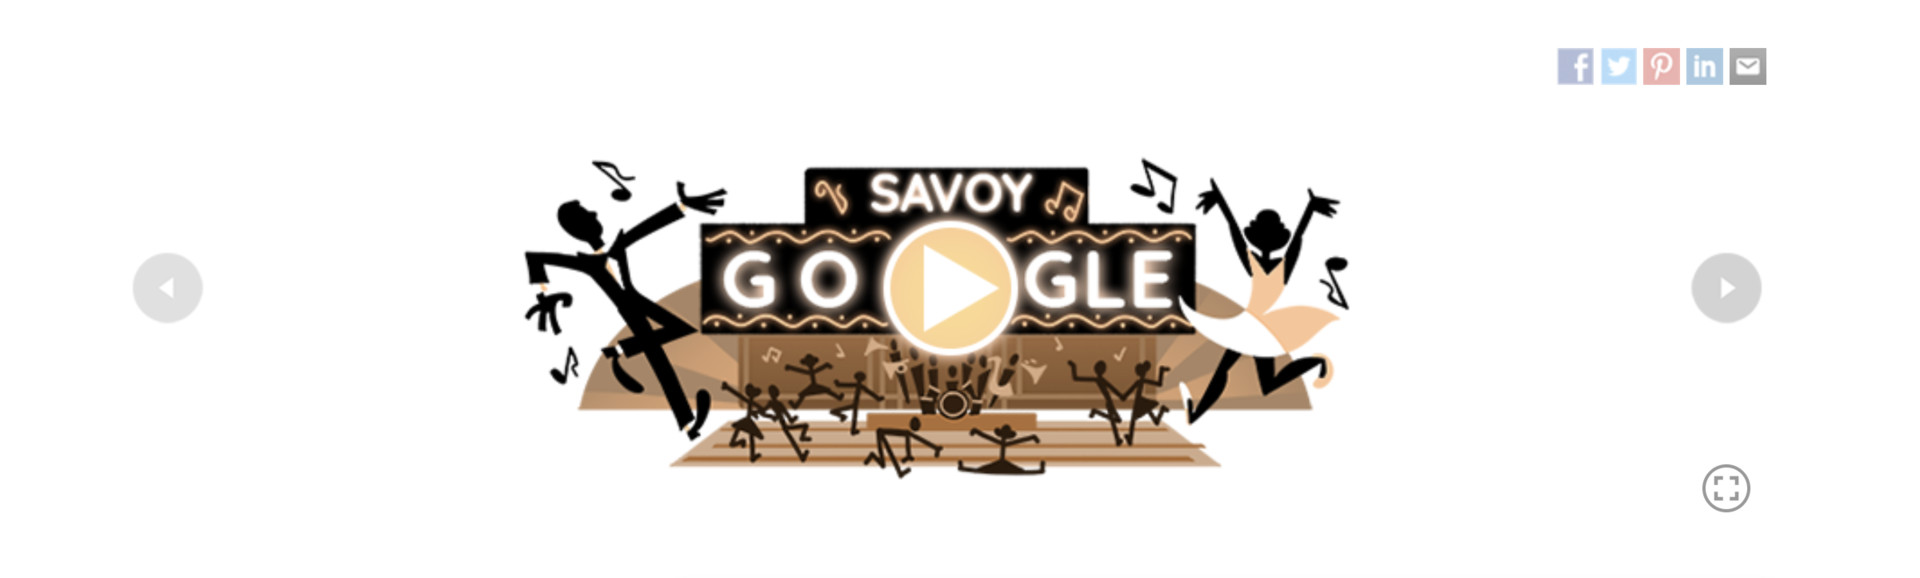 google doodle swing dancing savoy ballroom